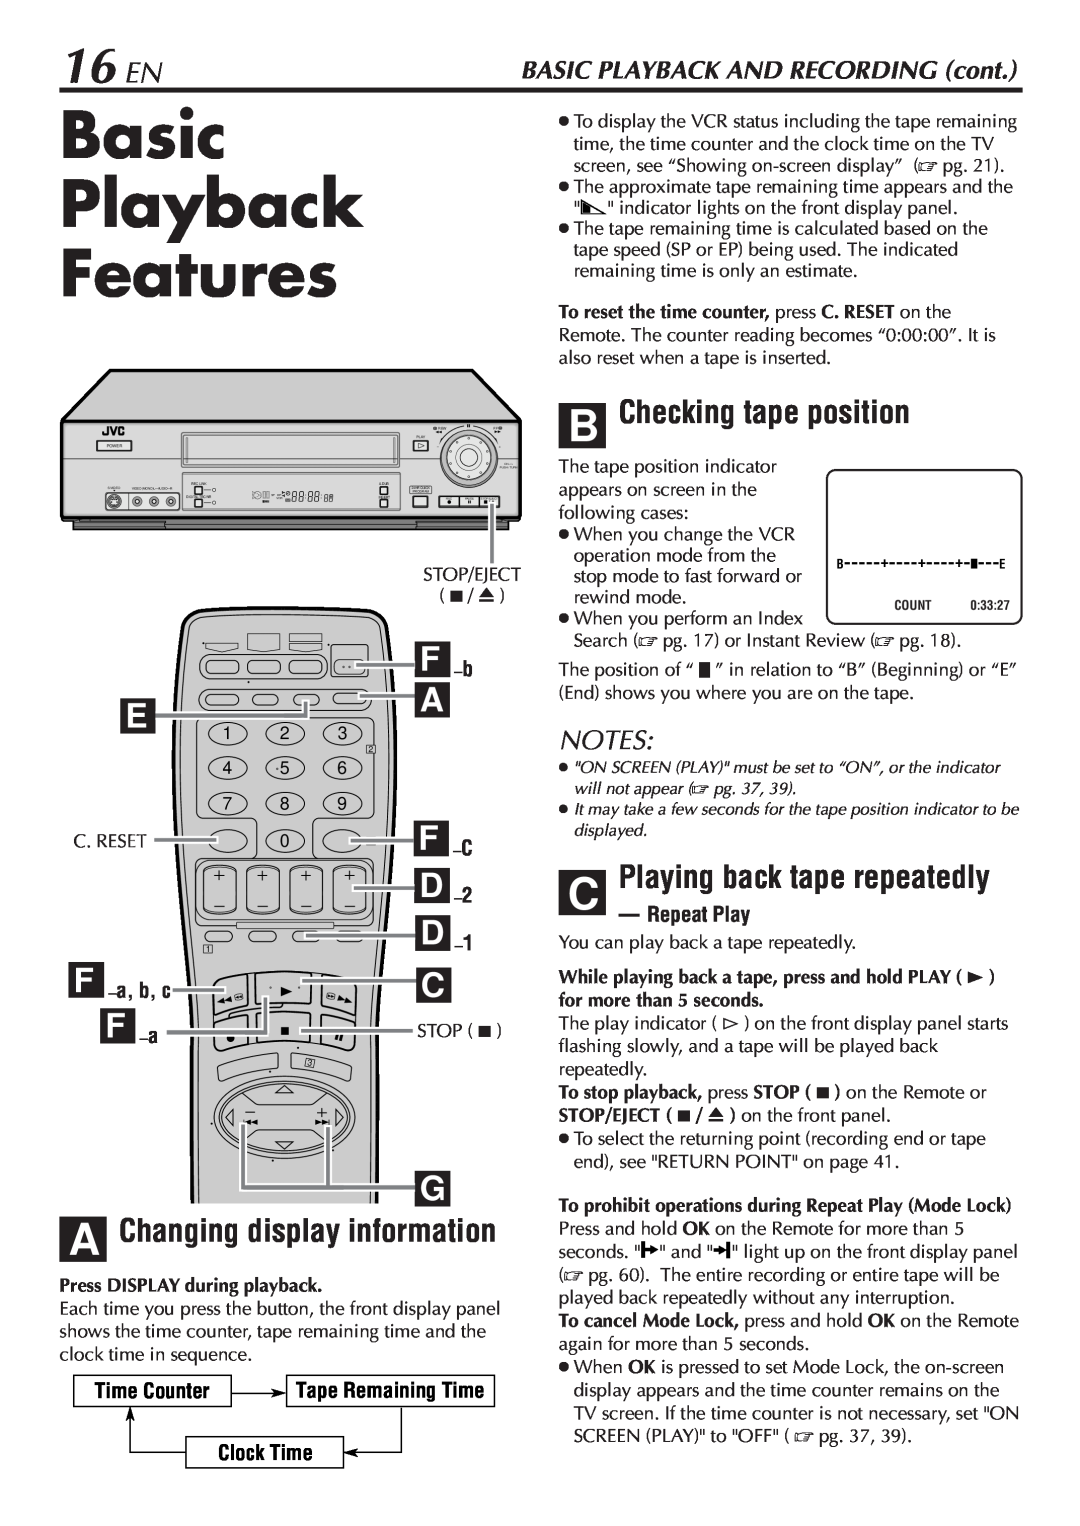 JVC SR-V10U manual Basic Playback Features, 16 EN, F –b, F -C, D, A Changing display information, B Checking tape position 